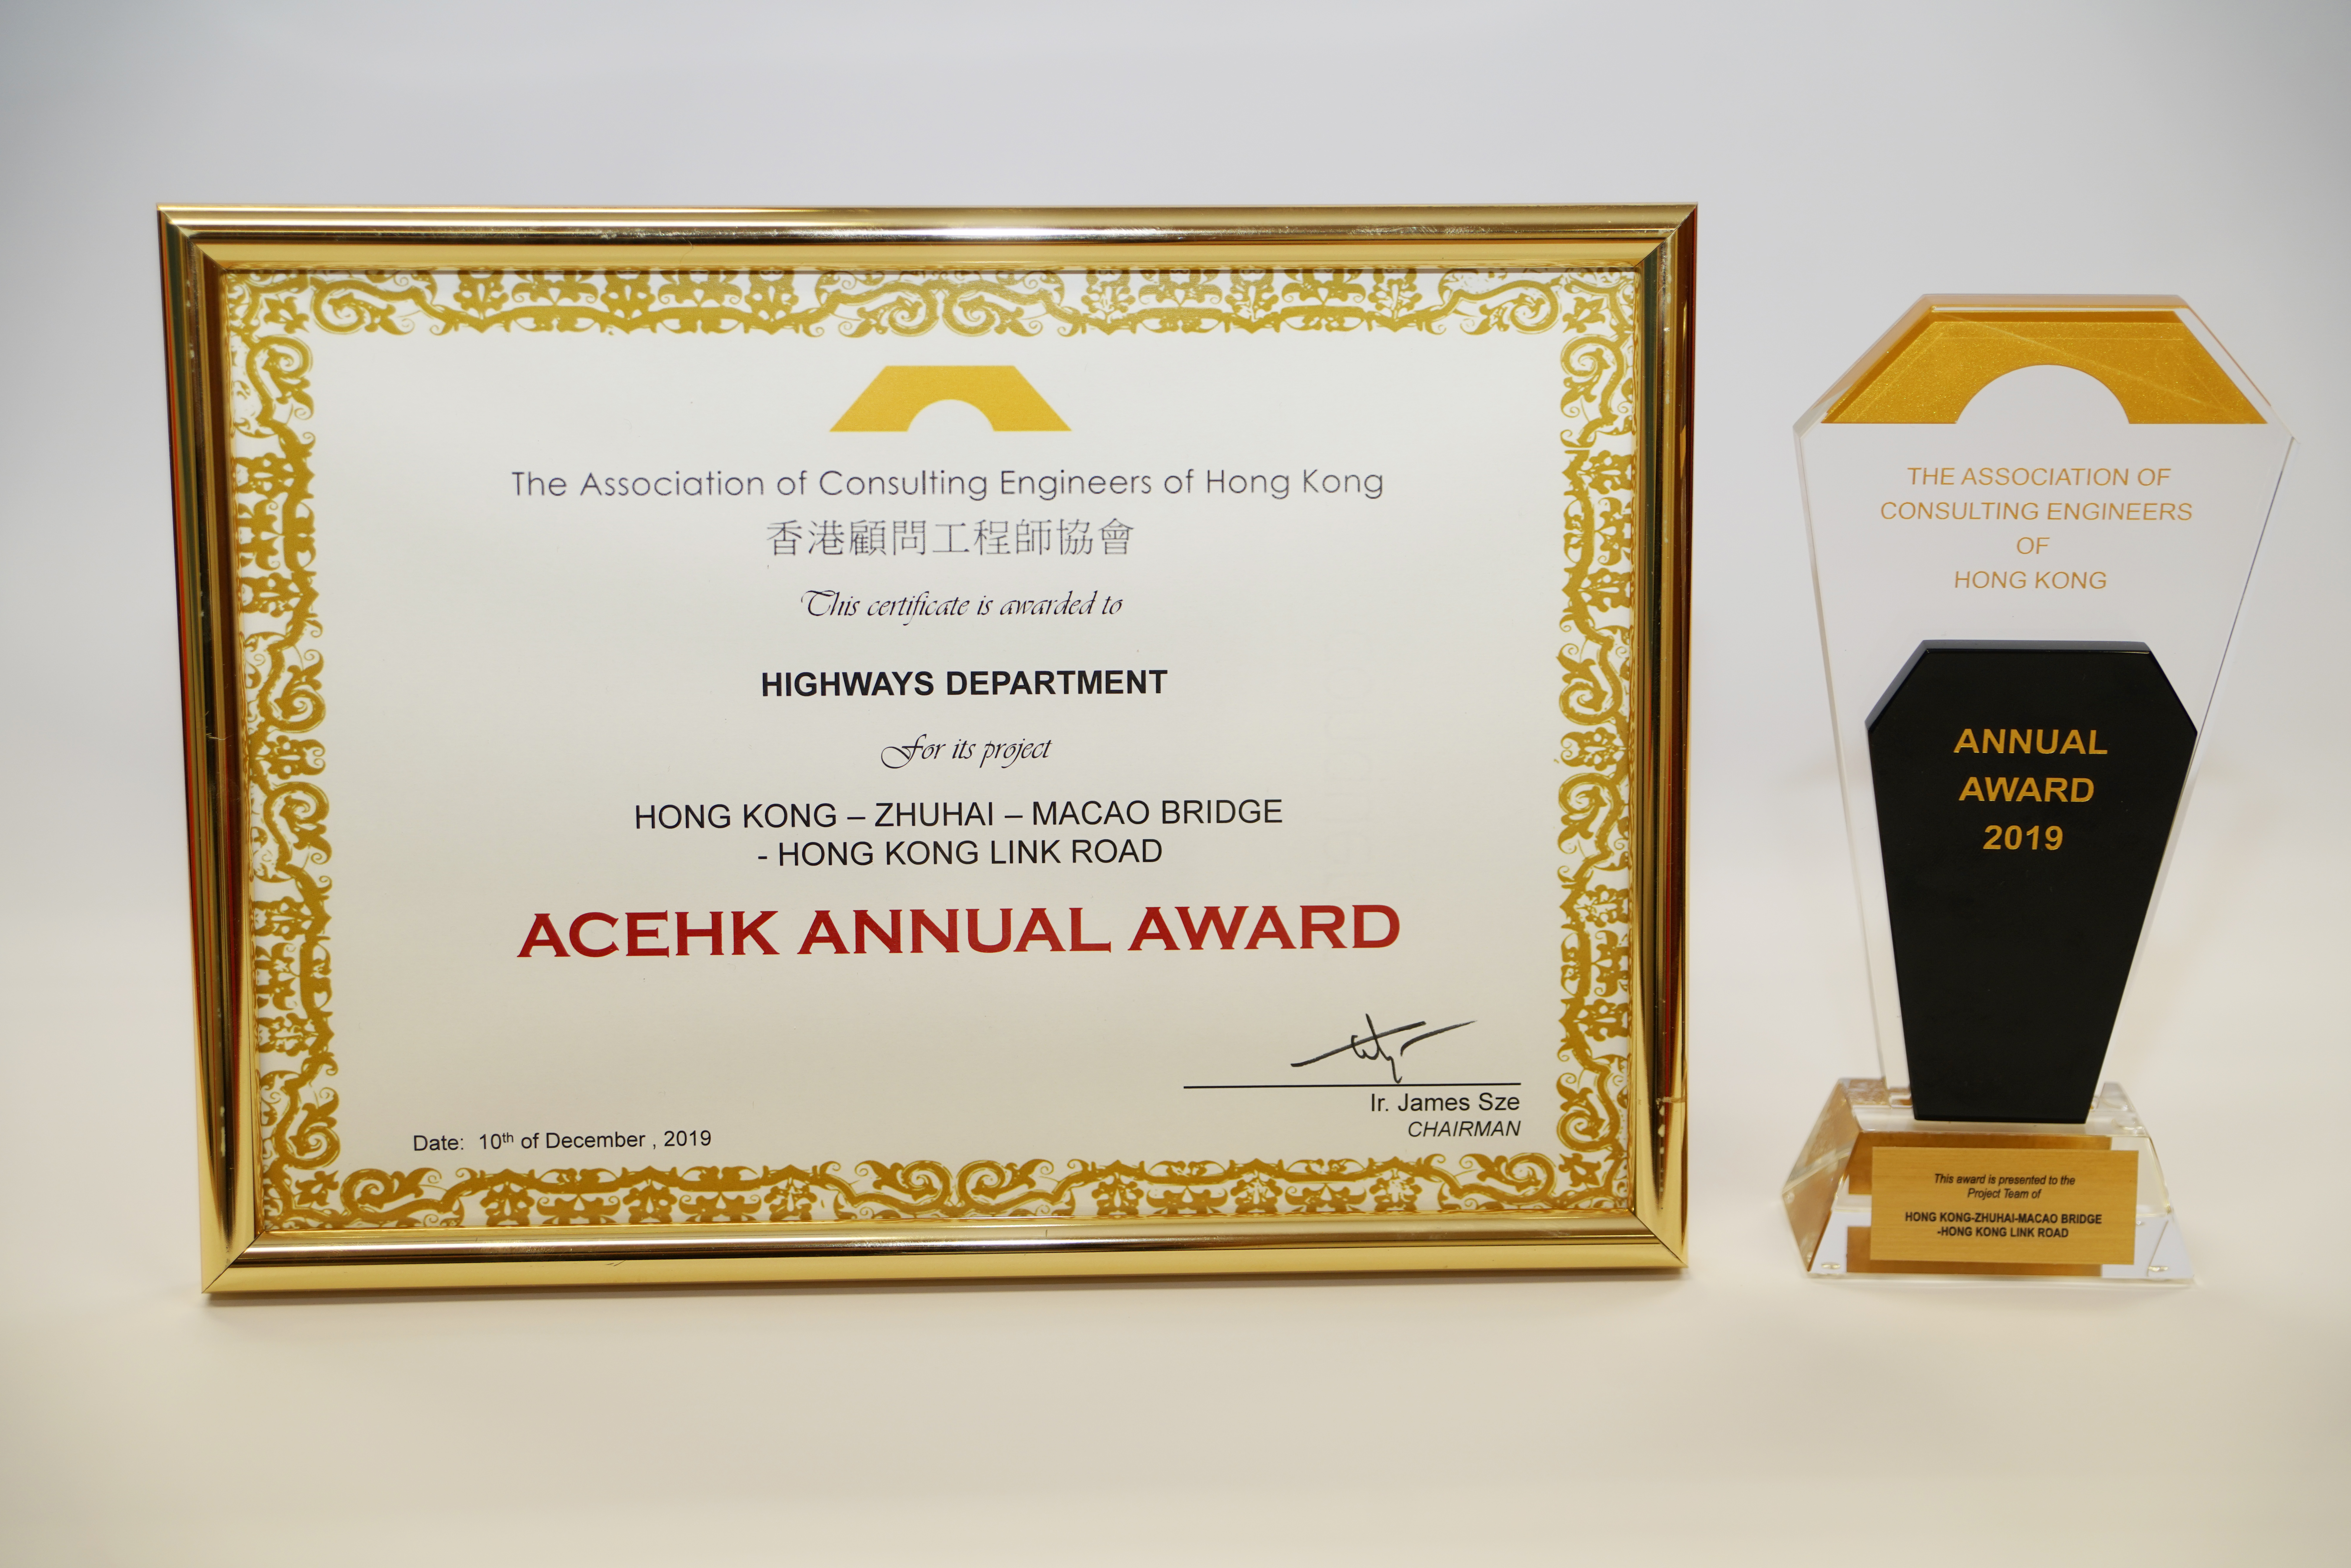 The Hong Kong – Zhuhai – Macao Bridge Hong Kong Link Road project was awarded the ACEHK Annual Award 2019.